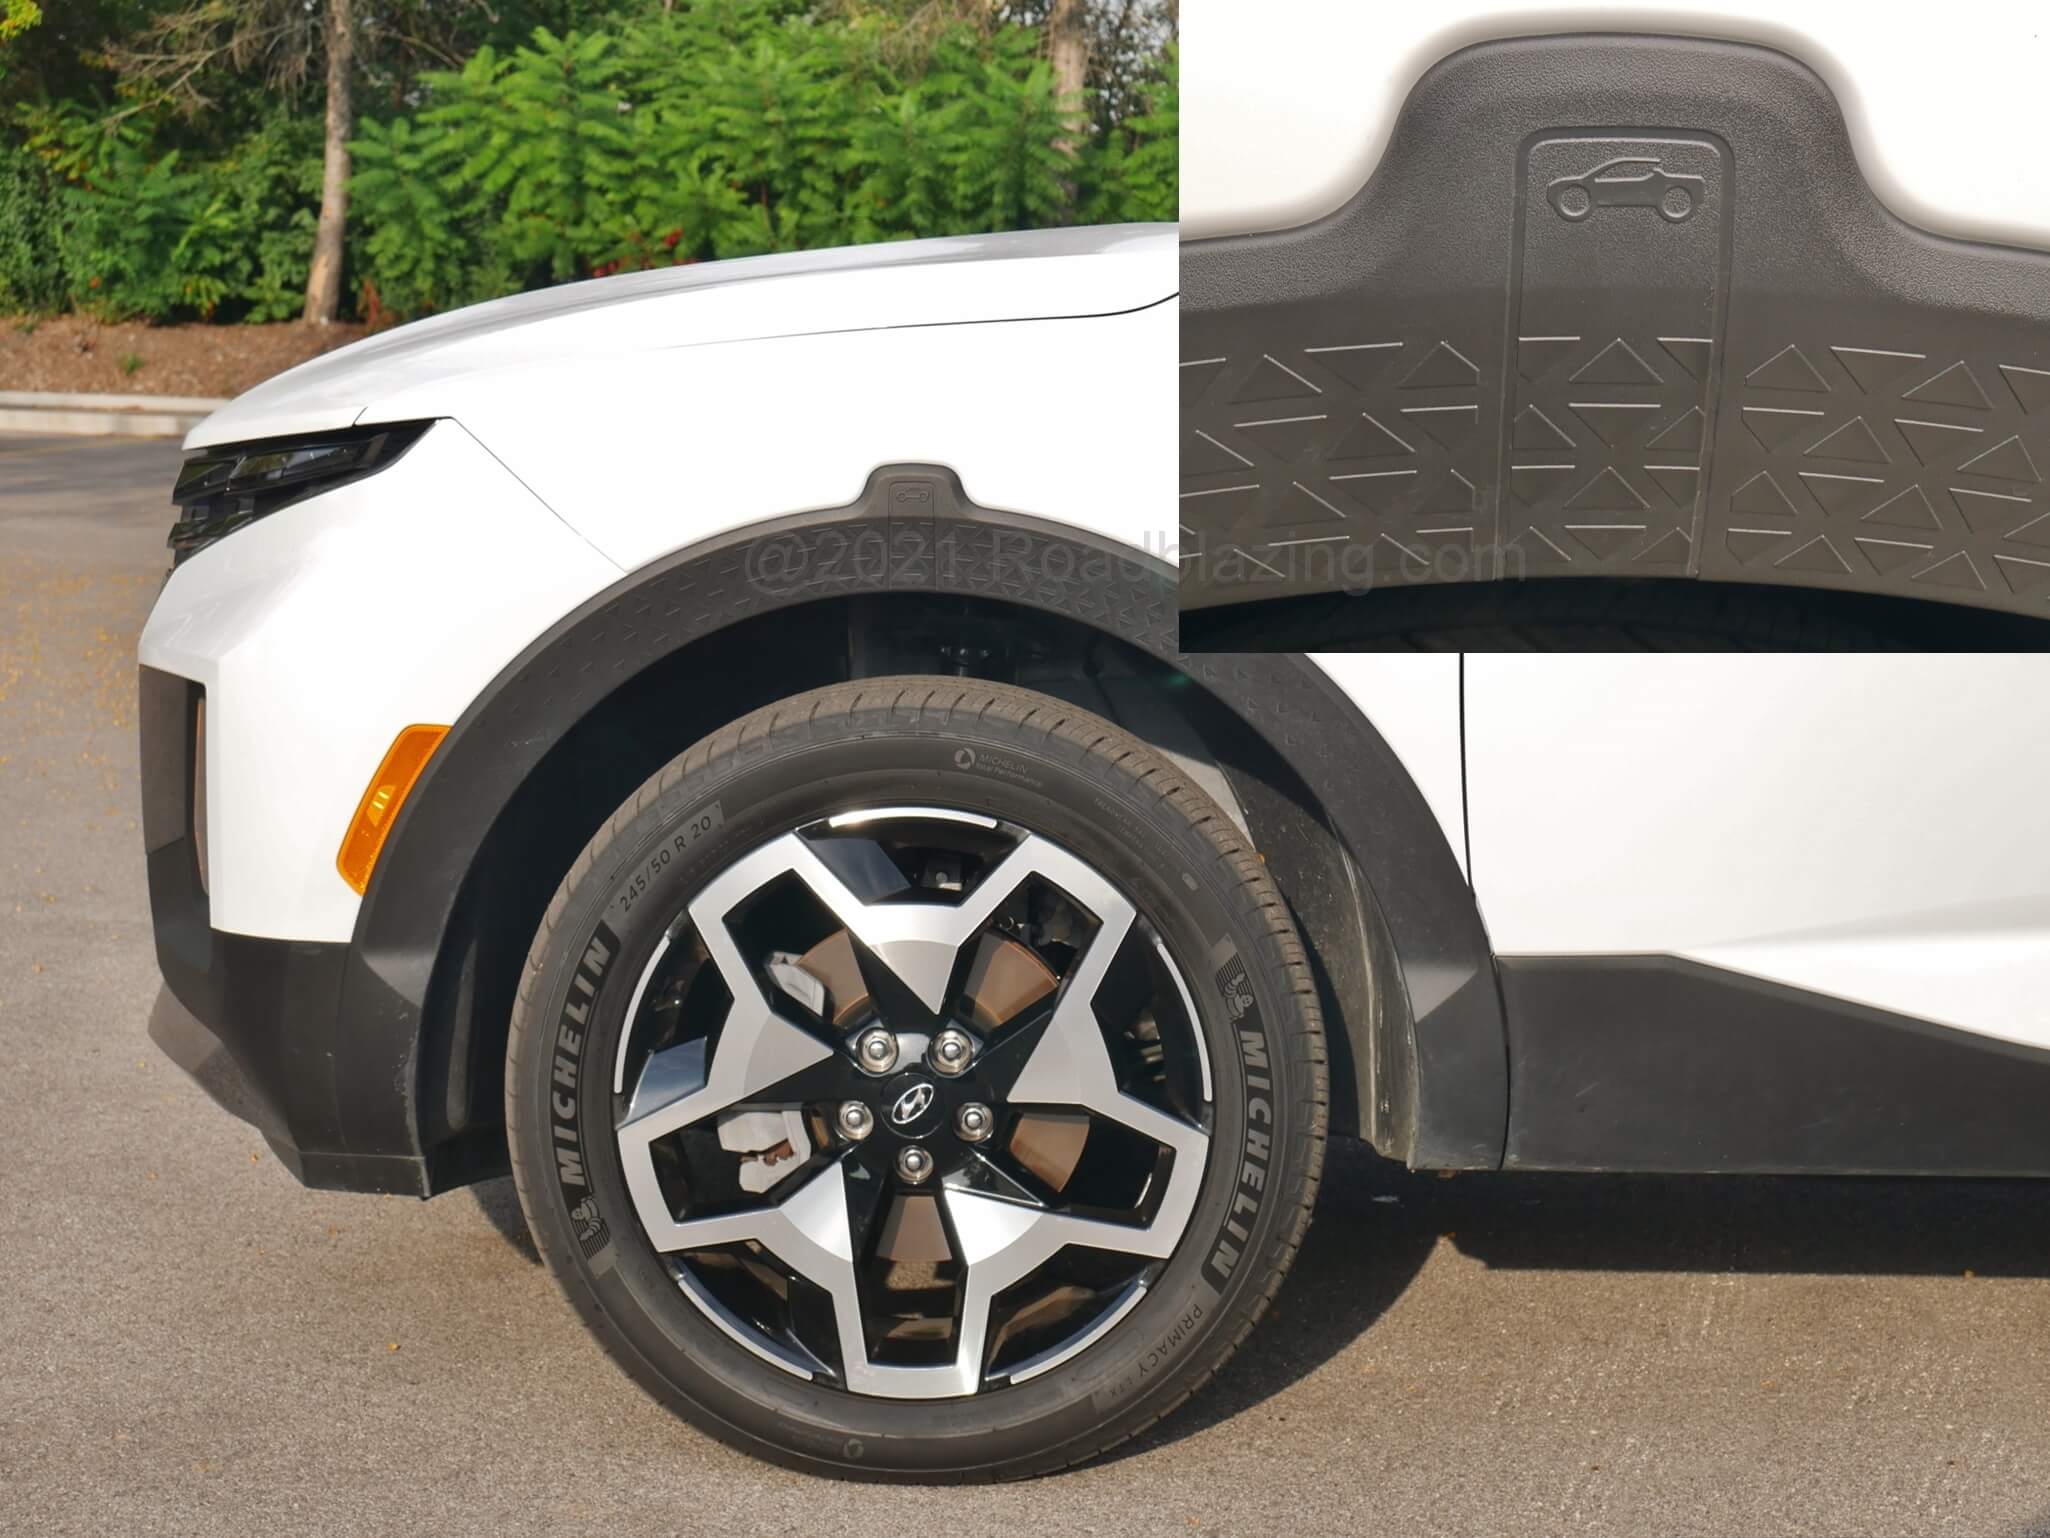 2022 Hyundai Santa Cruz 2.5T Limited AWD: 20" alloys + "Take that Jeep" wheel arch Easter eggs.